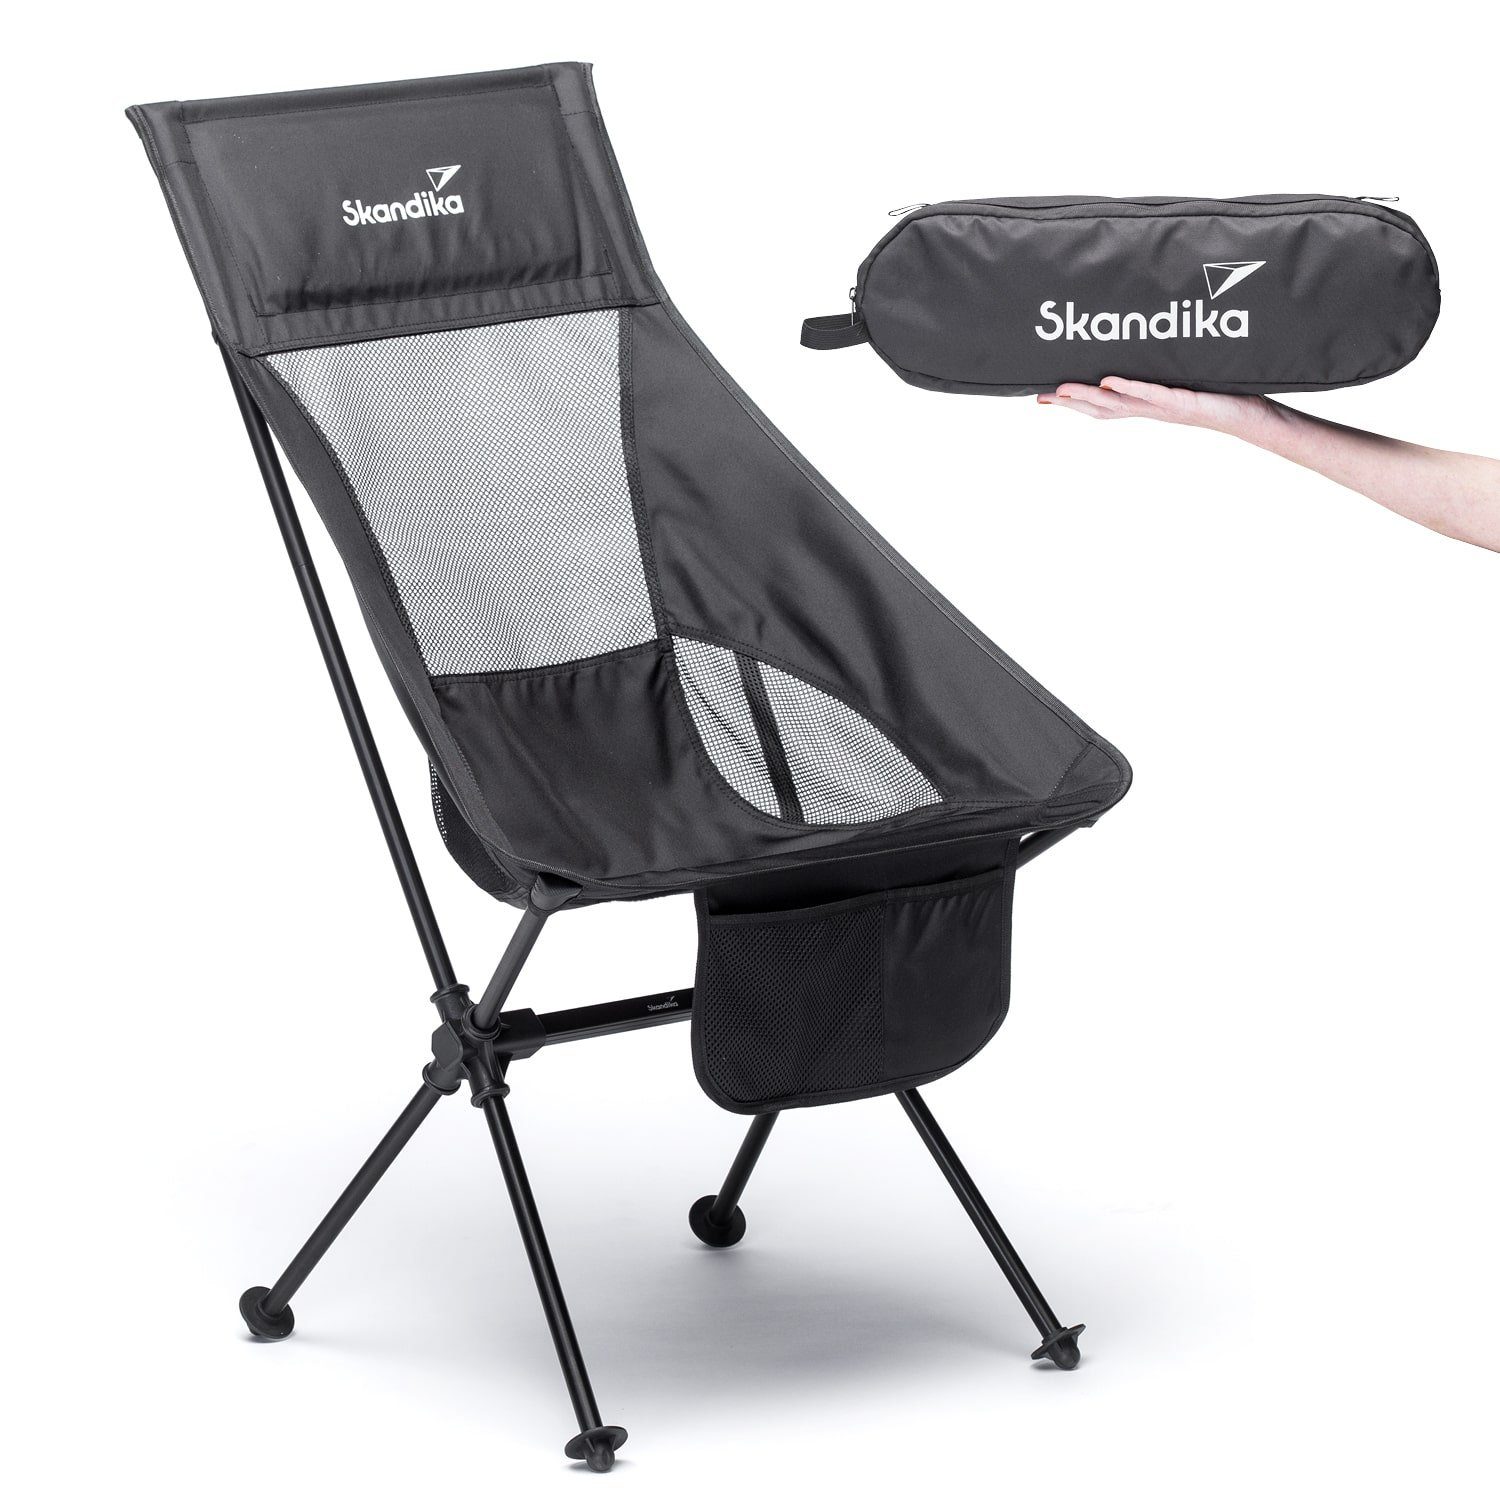 Skandika Campingstuhl »Campingstuhl Compact«, Farbe: Schwarz, Camping  Stuhl, Anglerstuhl